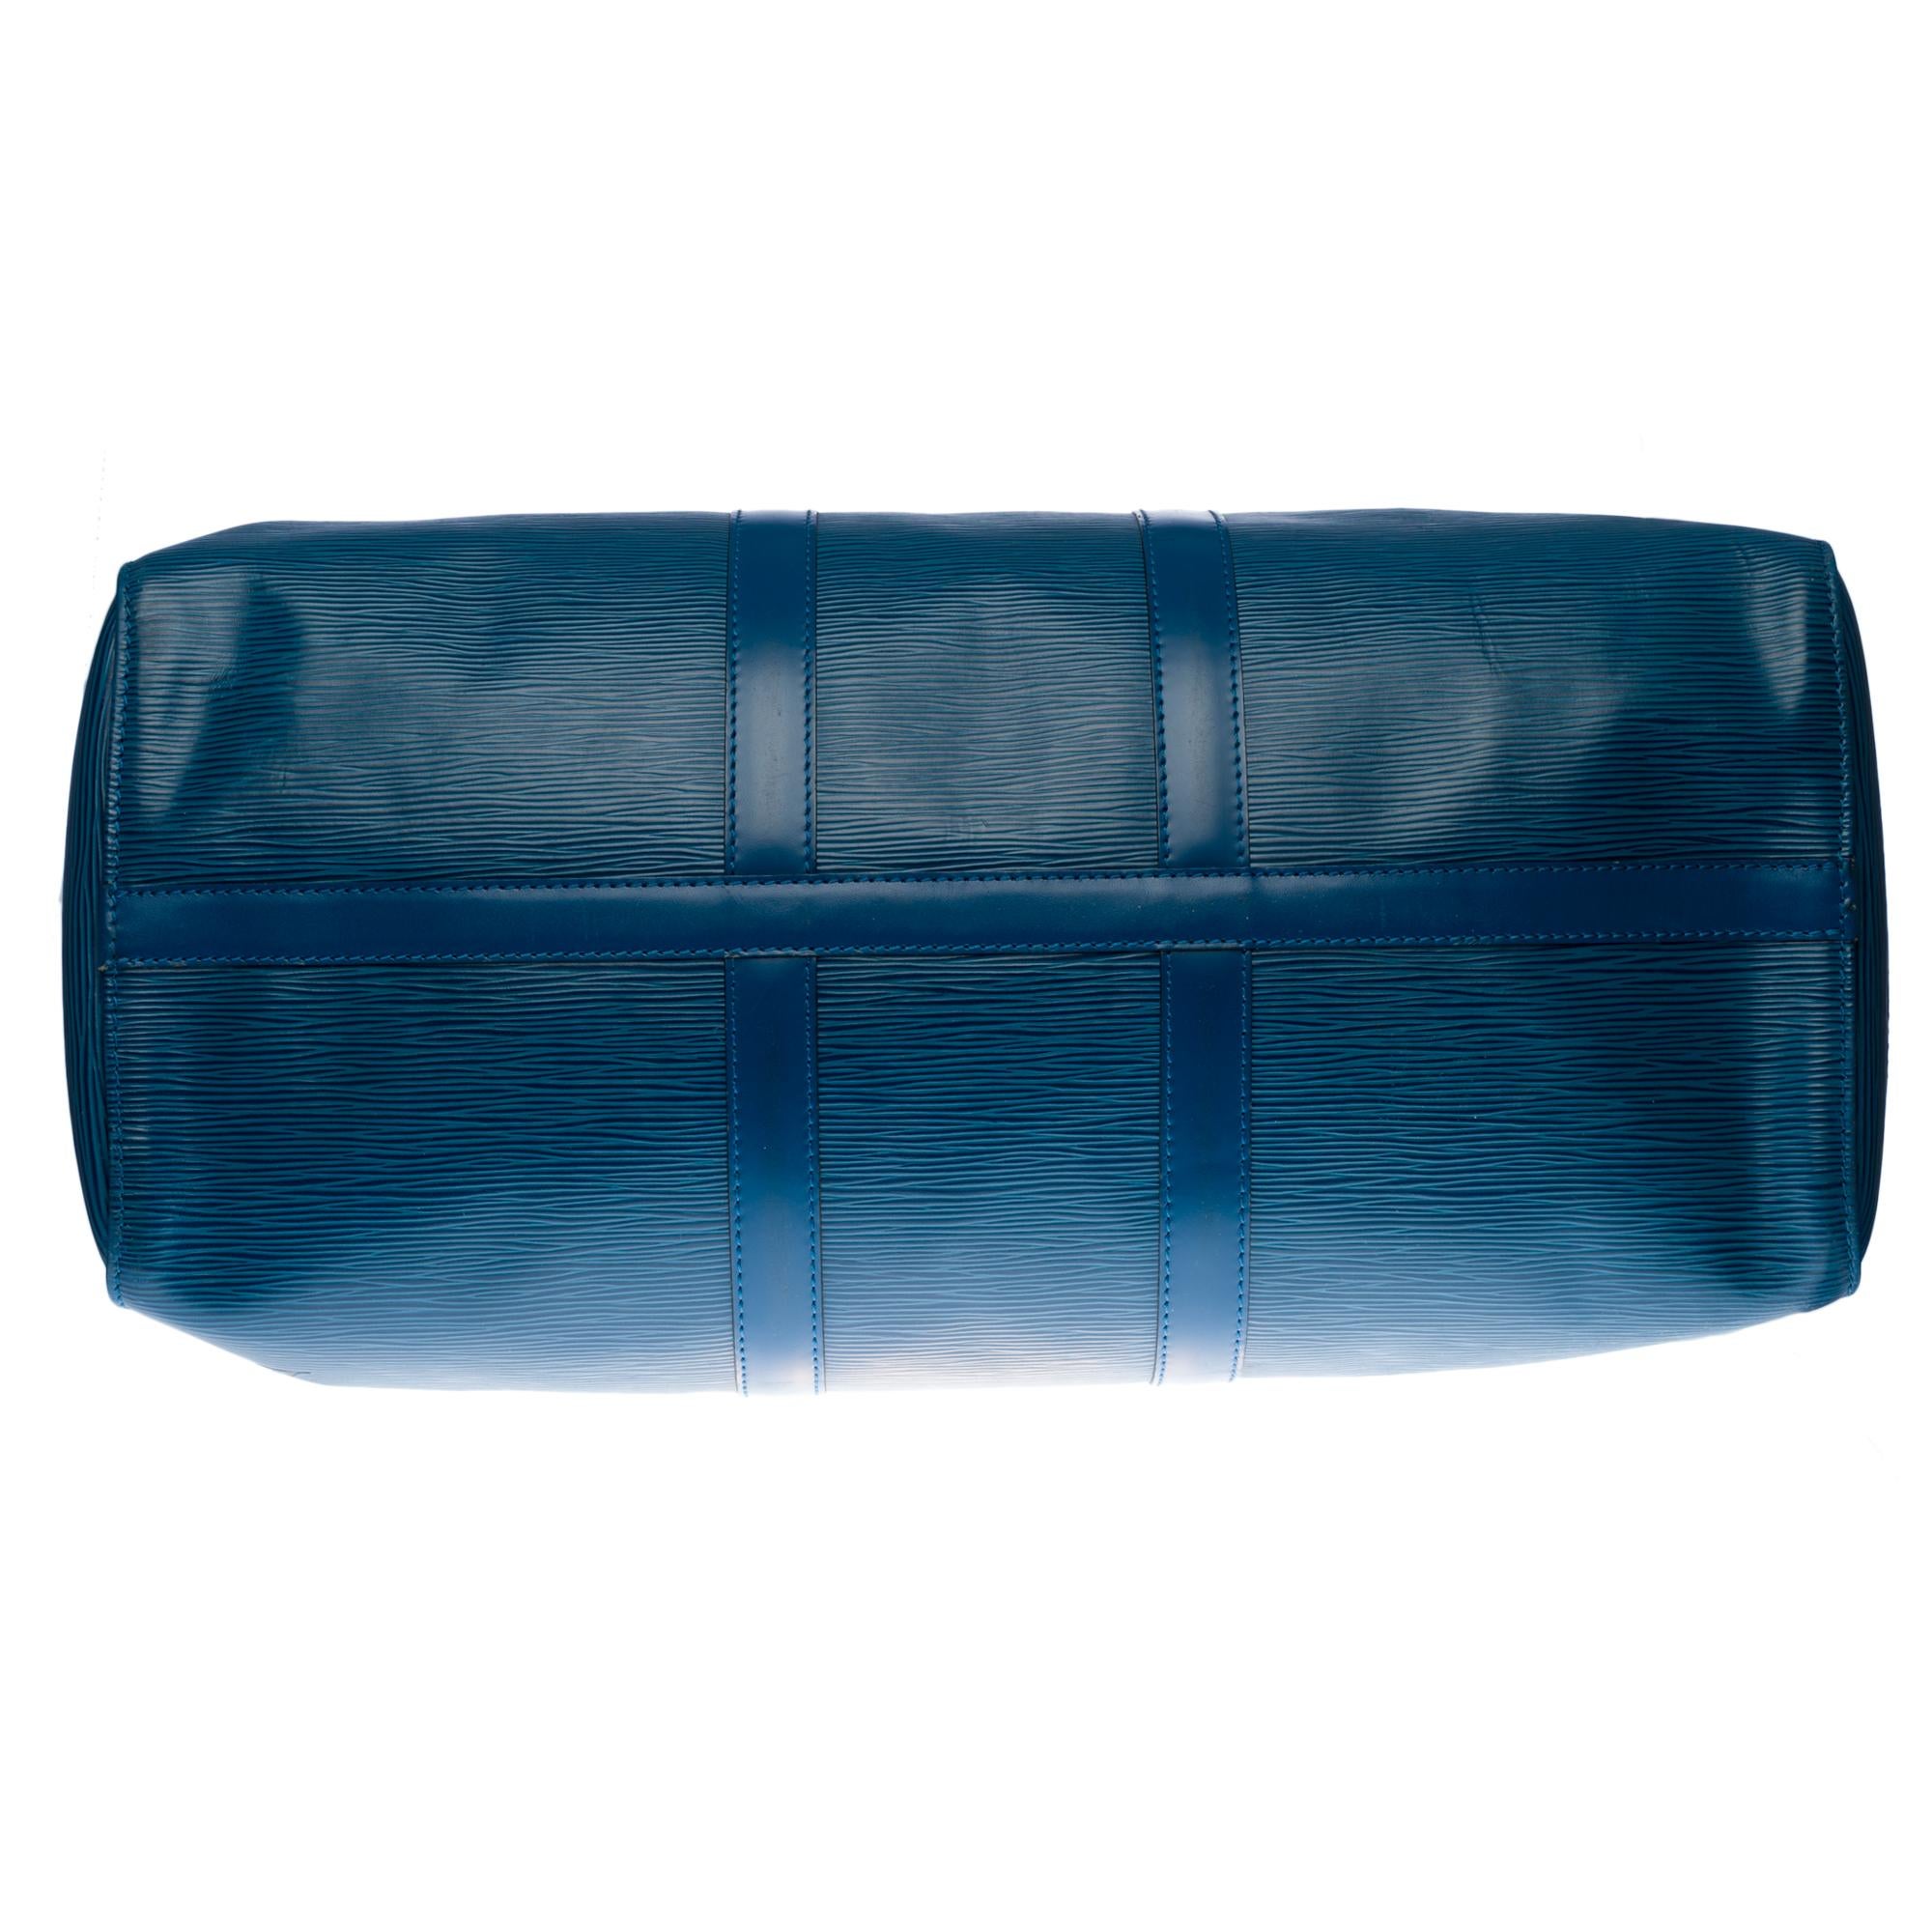 Louis Vuitton Keepall 45 Travel bag in blue épi leather 3